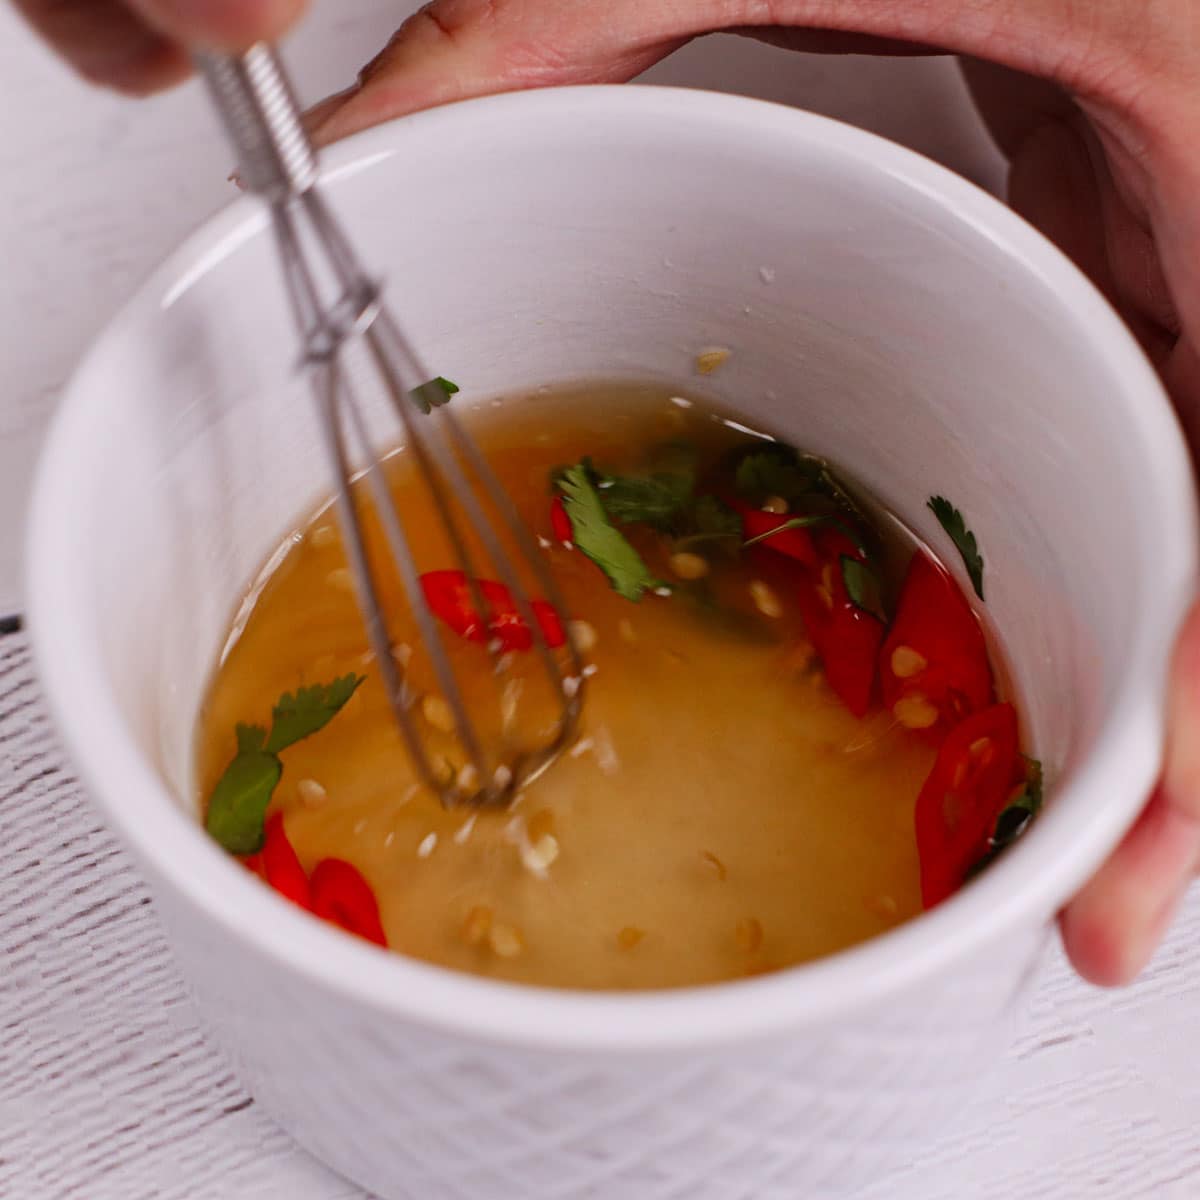 Mixing thai spicy dip in a ramekin bowl